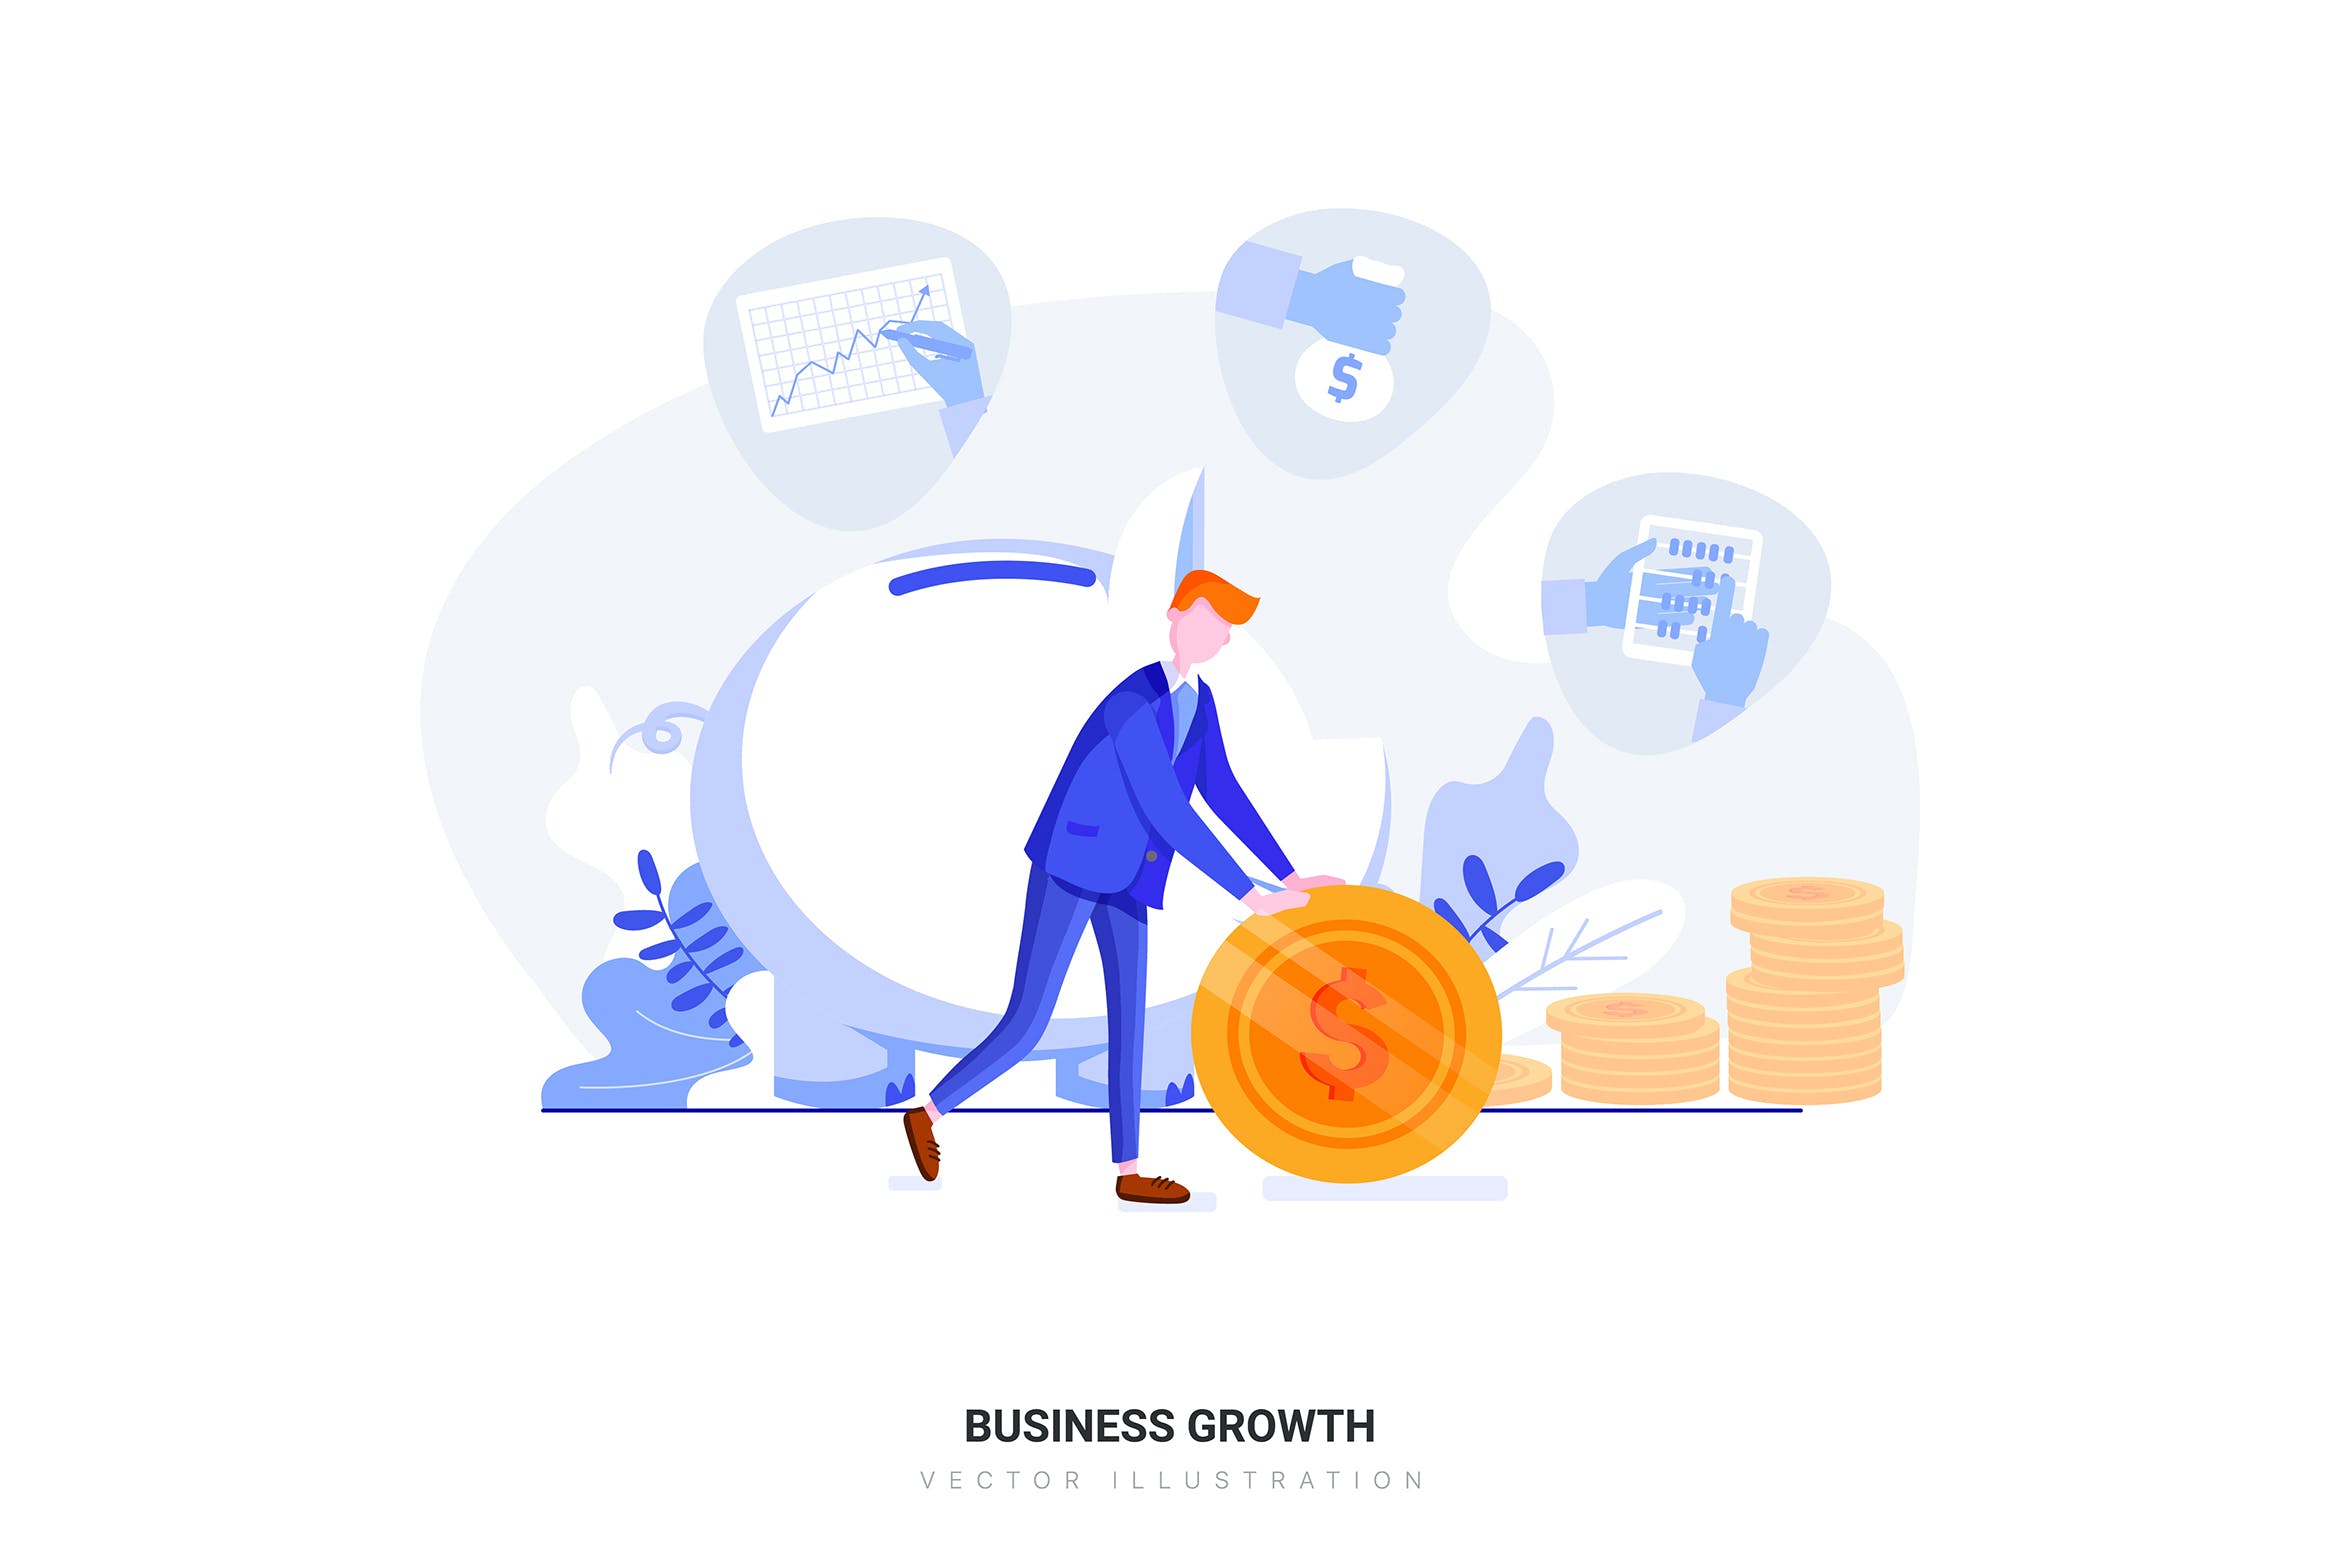 业务增长矢量概念插画素材 Business Growth Vector Illustration插图